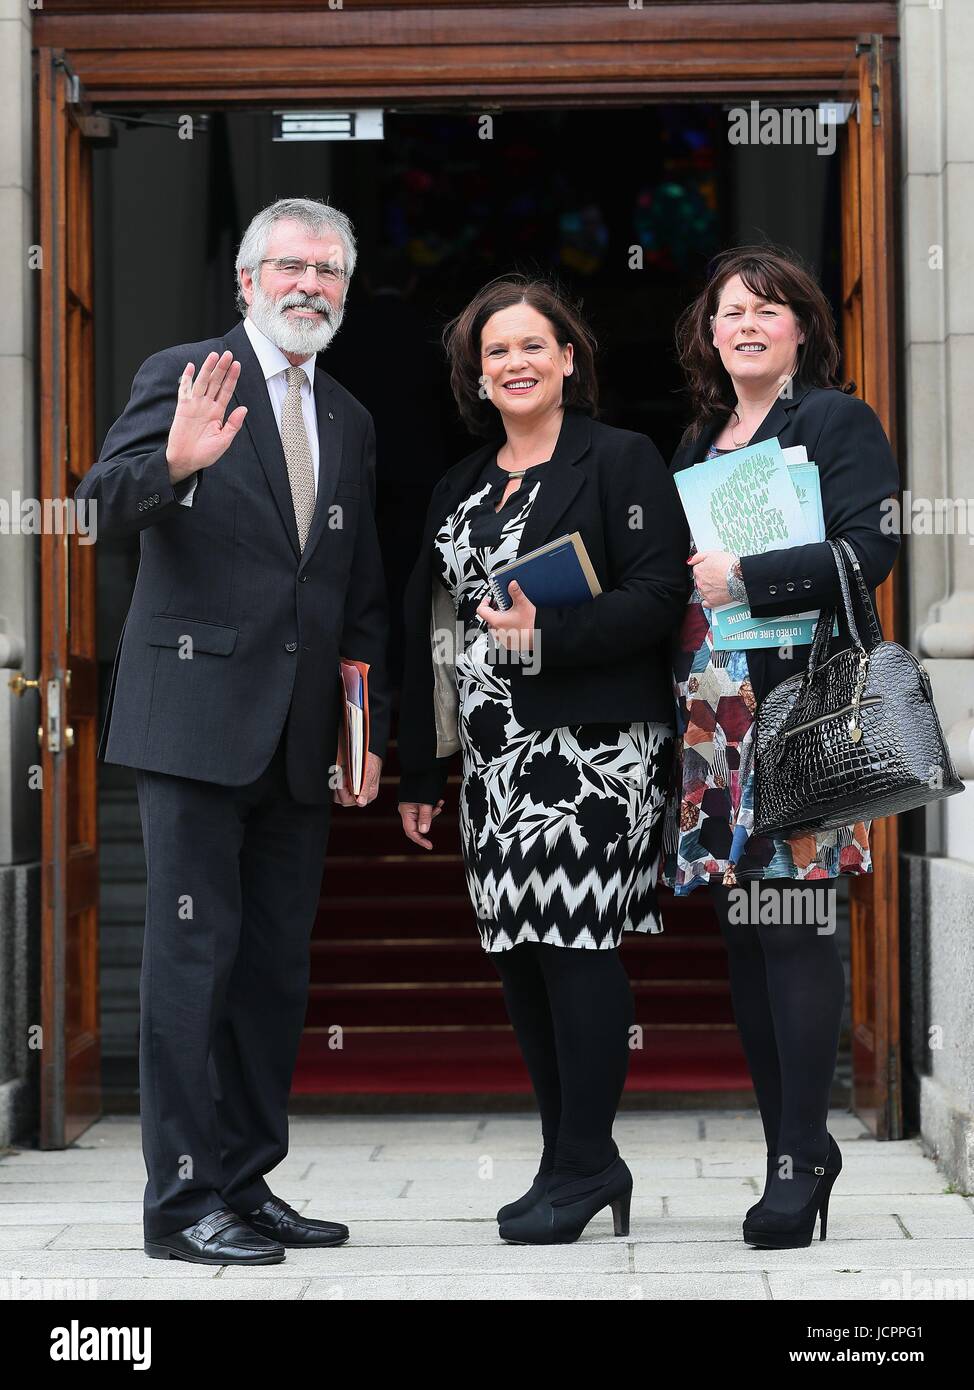 Sinn Fein's Gerry Adams along with deputy leader Mary Lou McDonald (centre) and MP Michelle Gildernew at Government Buildings in Dublin for a meeting with Taoiseach Leo Varadkar. Stock Photo